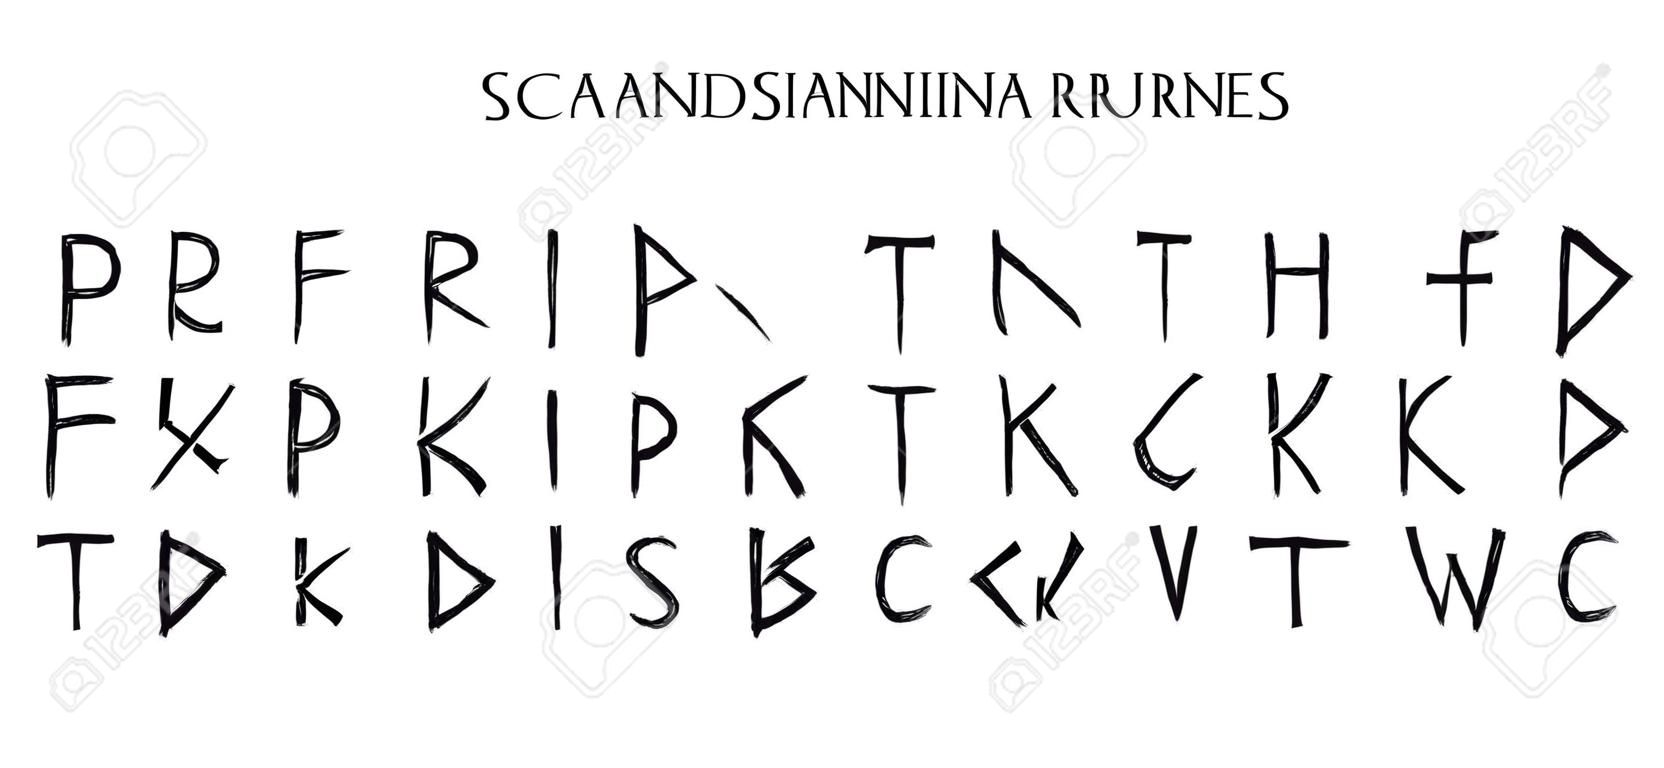 Magic Scandinavian Runes. Old Futhark. vector hand drawn